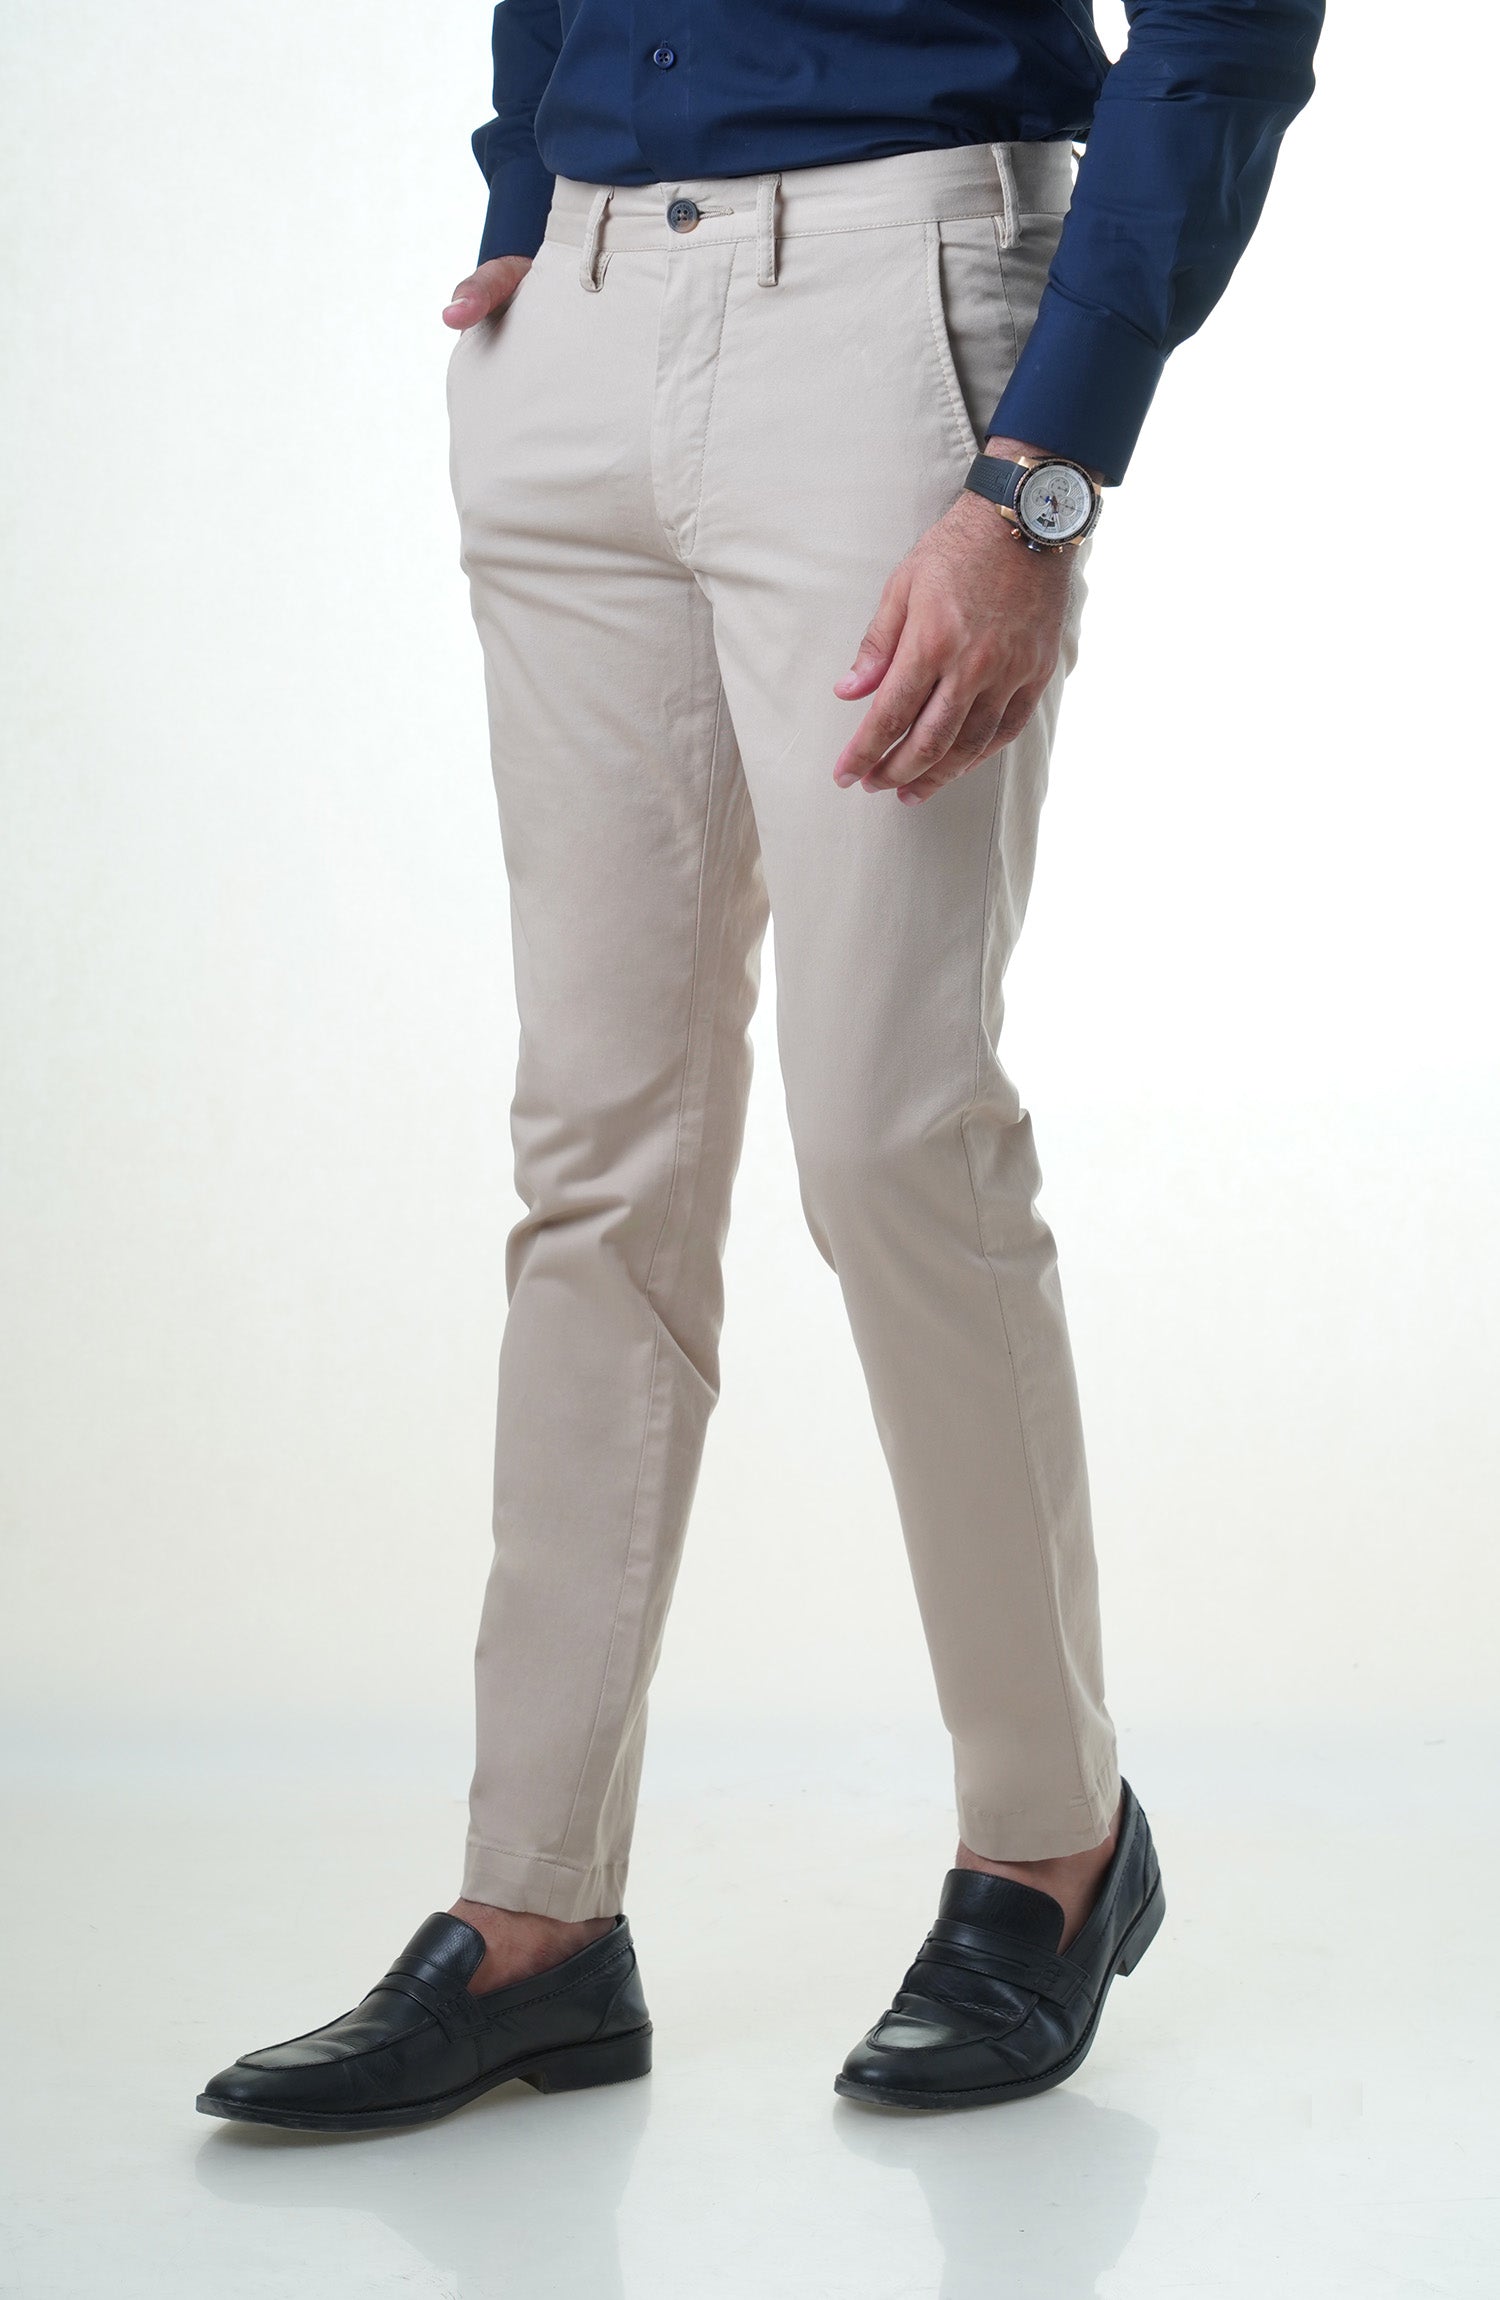 HUPOM Womens Dress Pants Stretchy Cargo Pants Chinos Mid Waist Rise Long  Straight-Leg Khaki XL